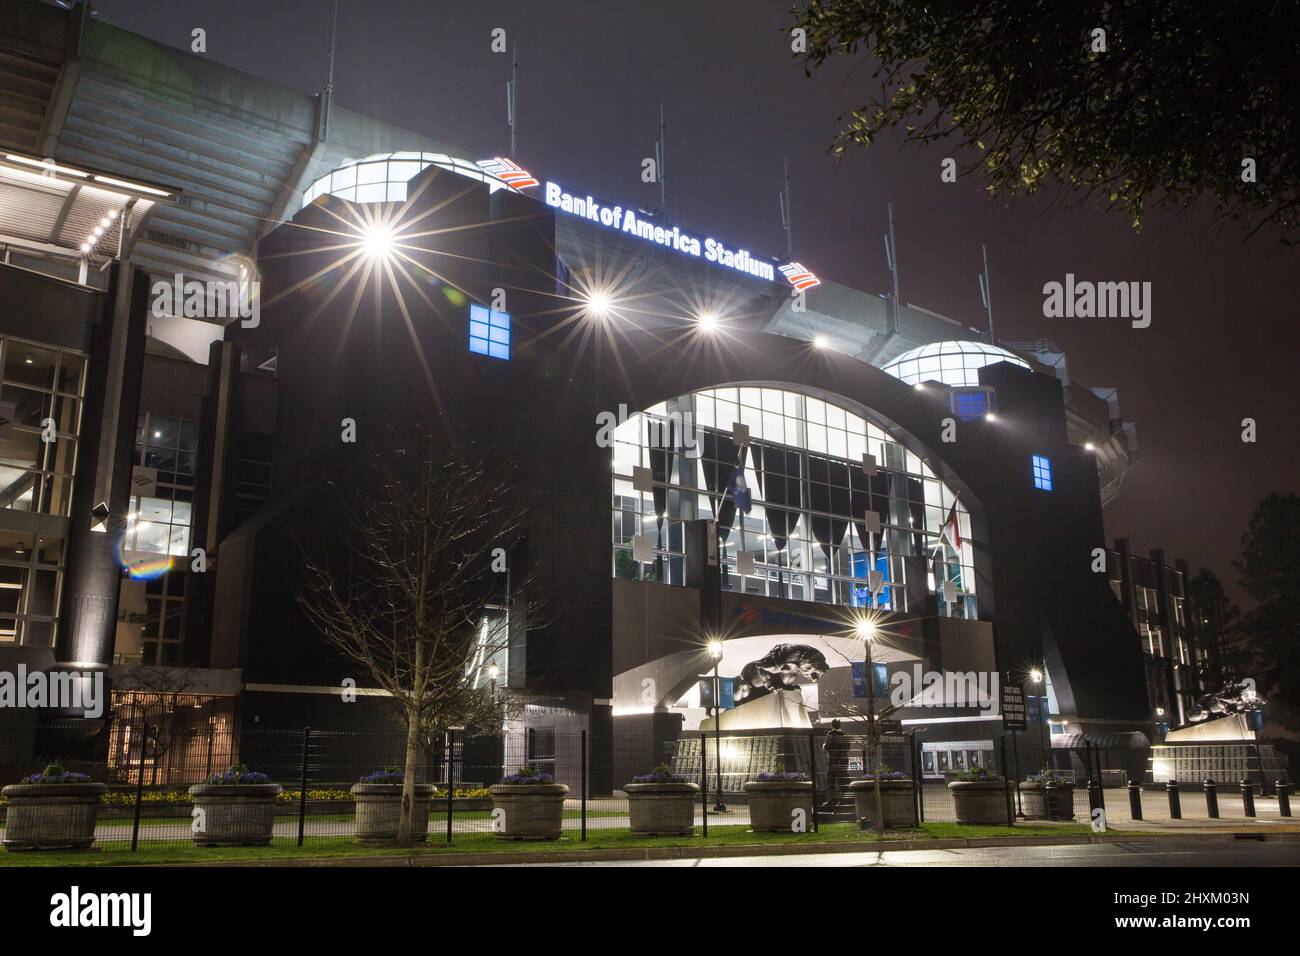 Nachtansicht des Bank of America Stadions in Charlotte, North Carolina, Heimstadion der Carolina Panthers der National Football League und der Major League Soccers Stockfoto